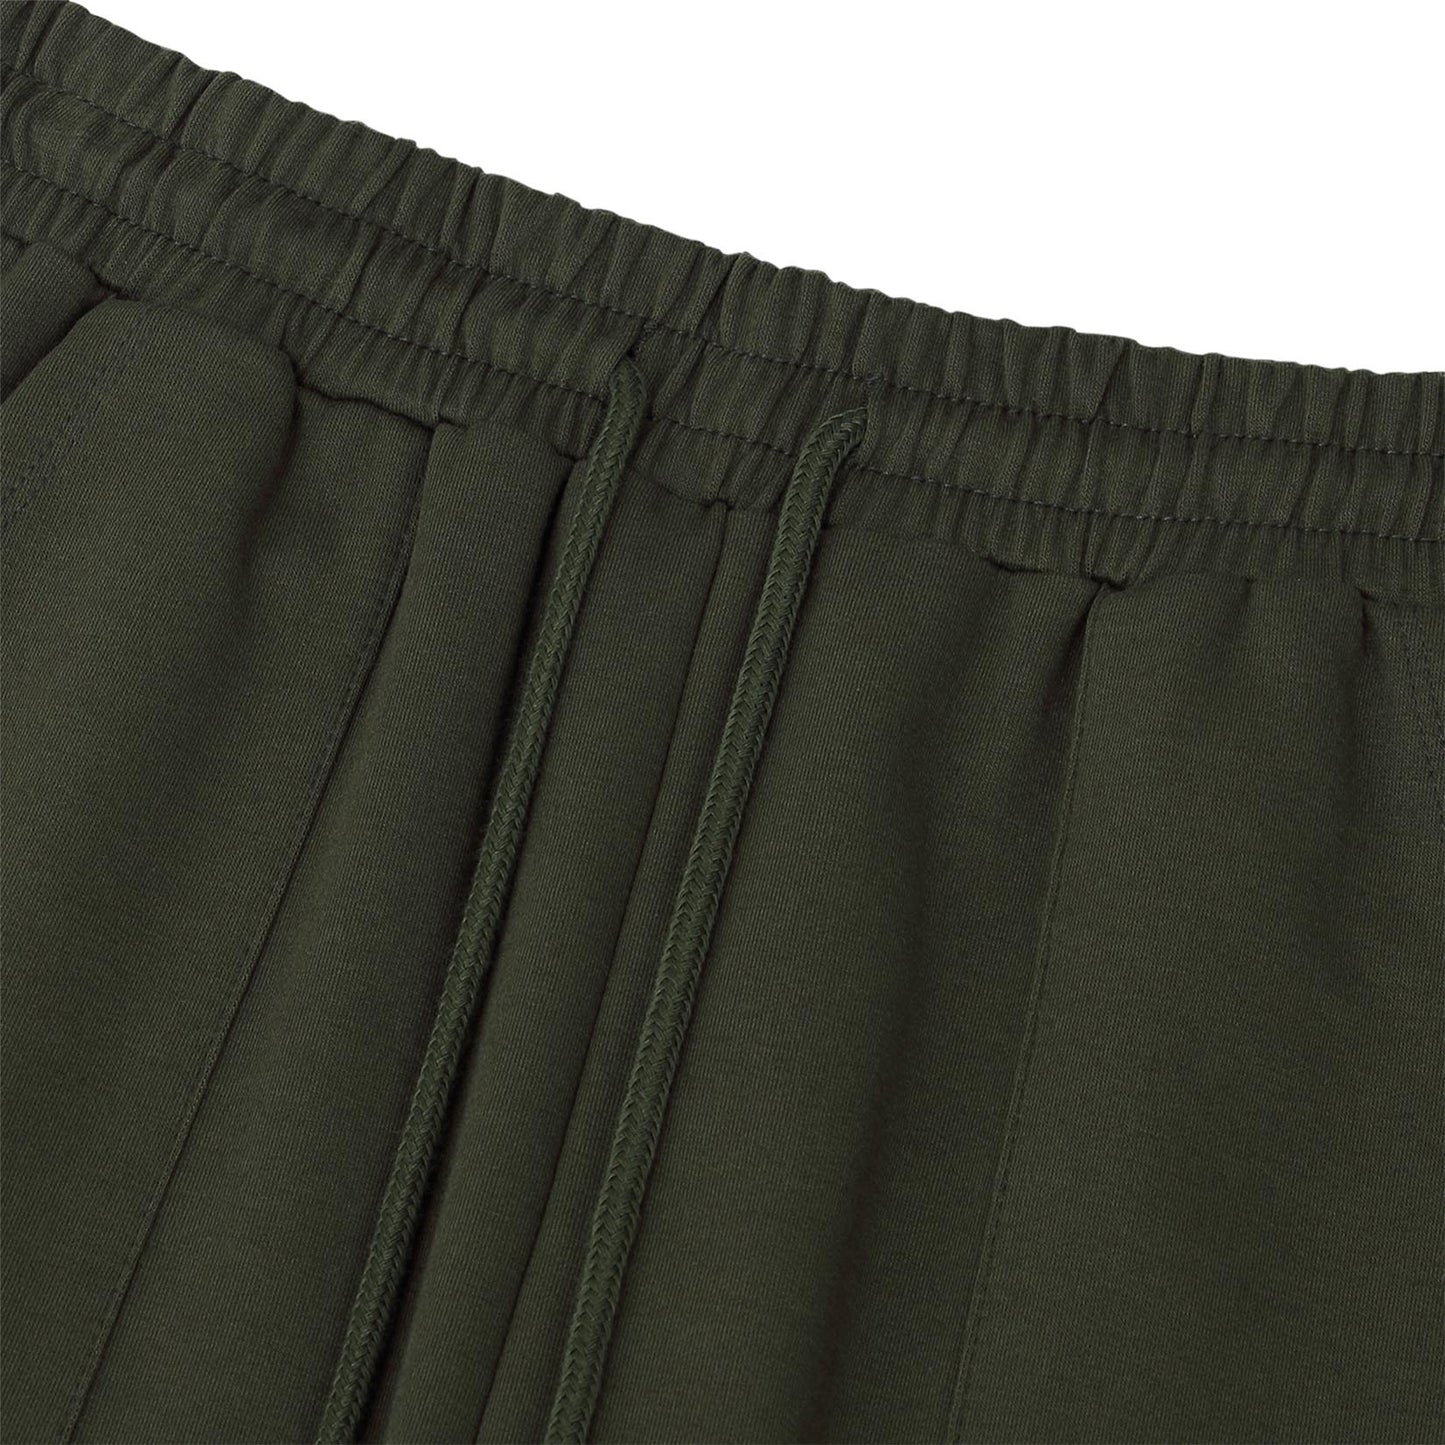 YESFASHION Women's Pockets Casual Sports Pants Green